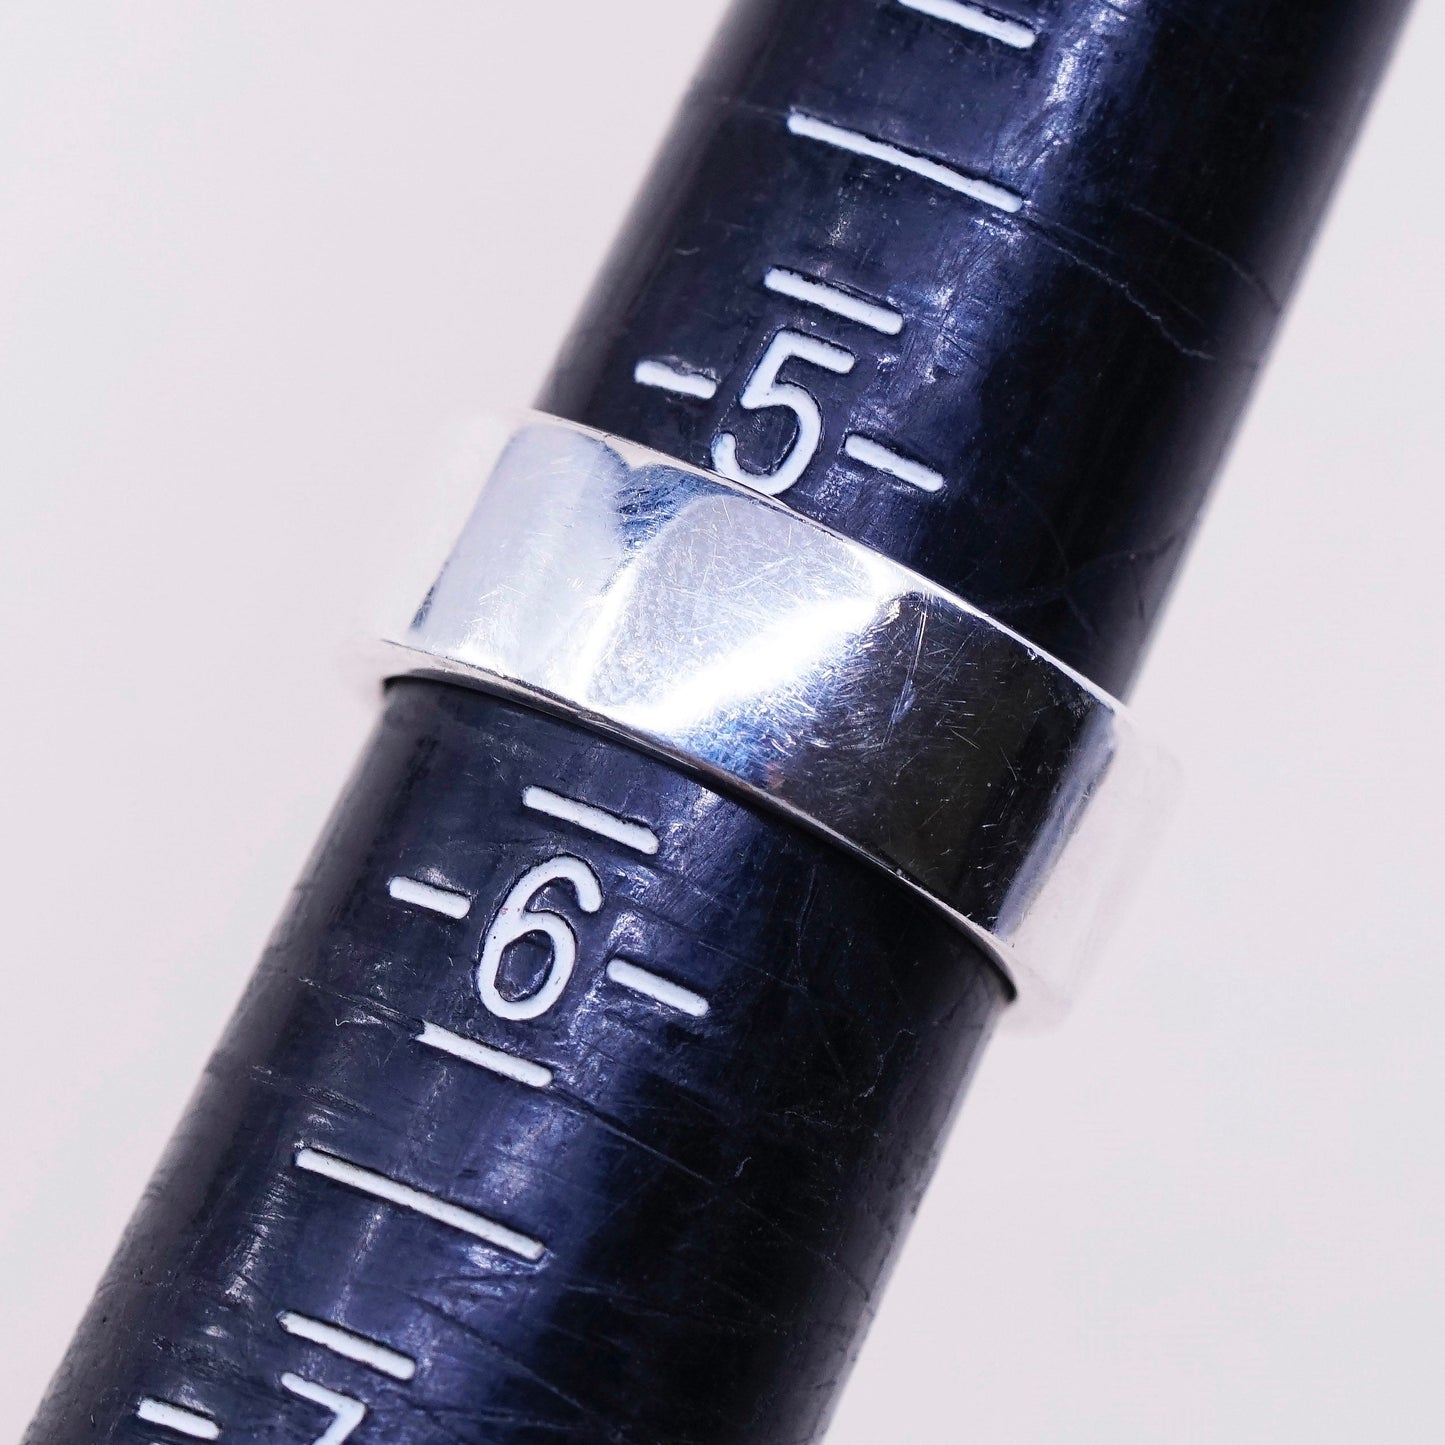 sz 5.25, vtg modern Sterling silver handmade cocktail ring, 925 w/ amethyst